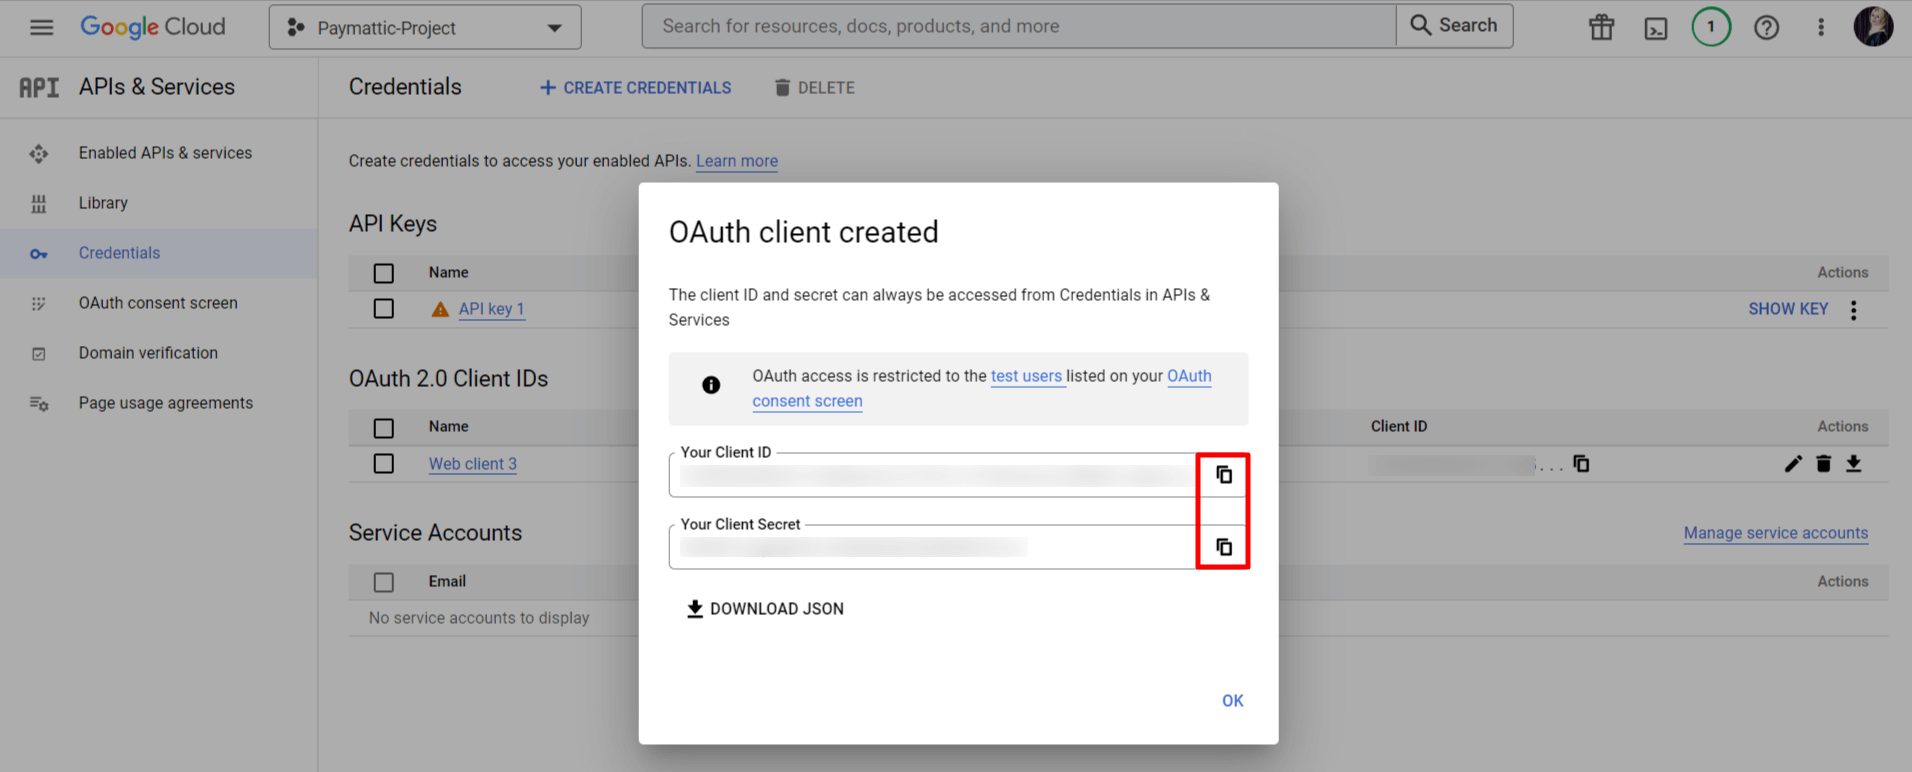 OAuth Client ID & Secret